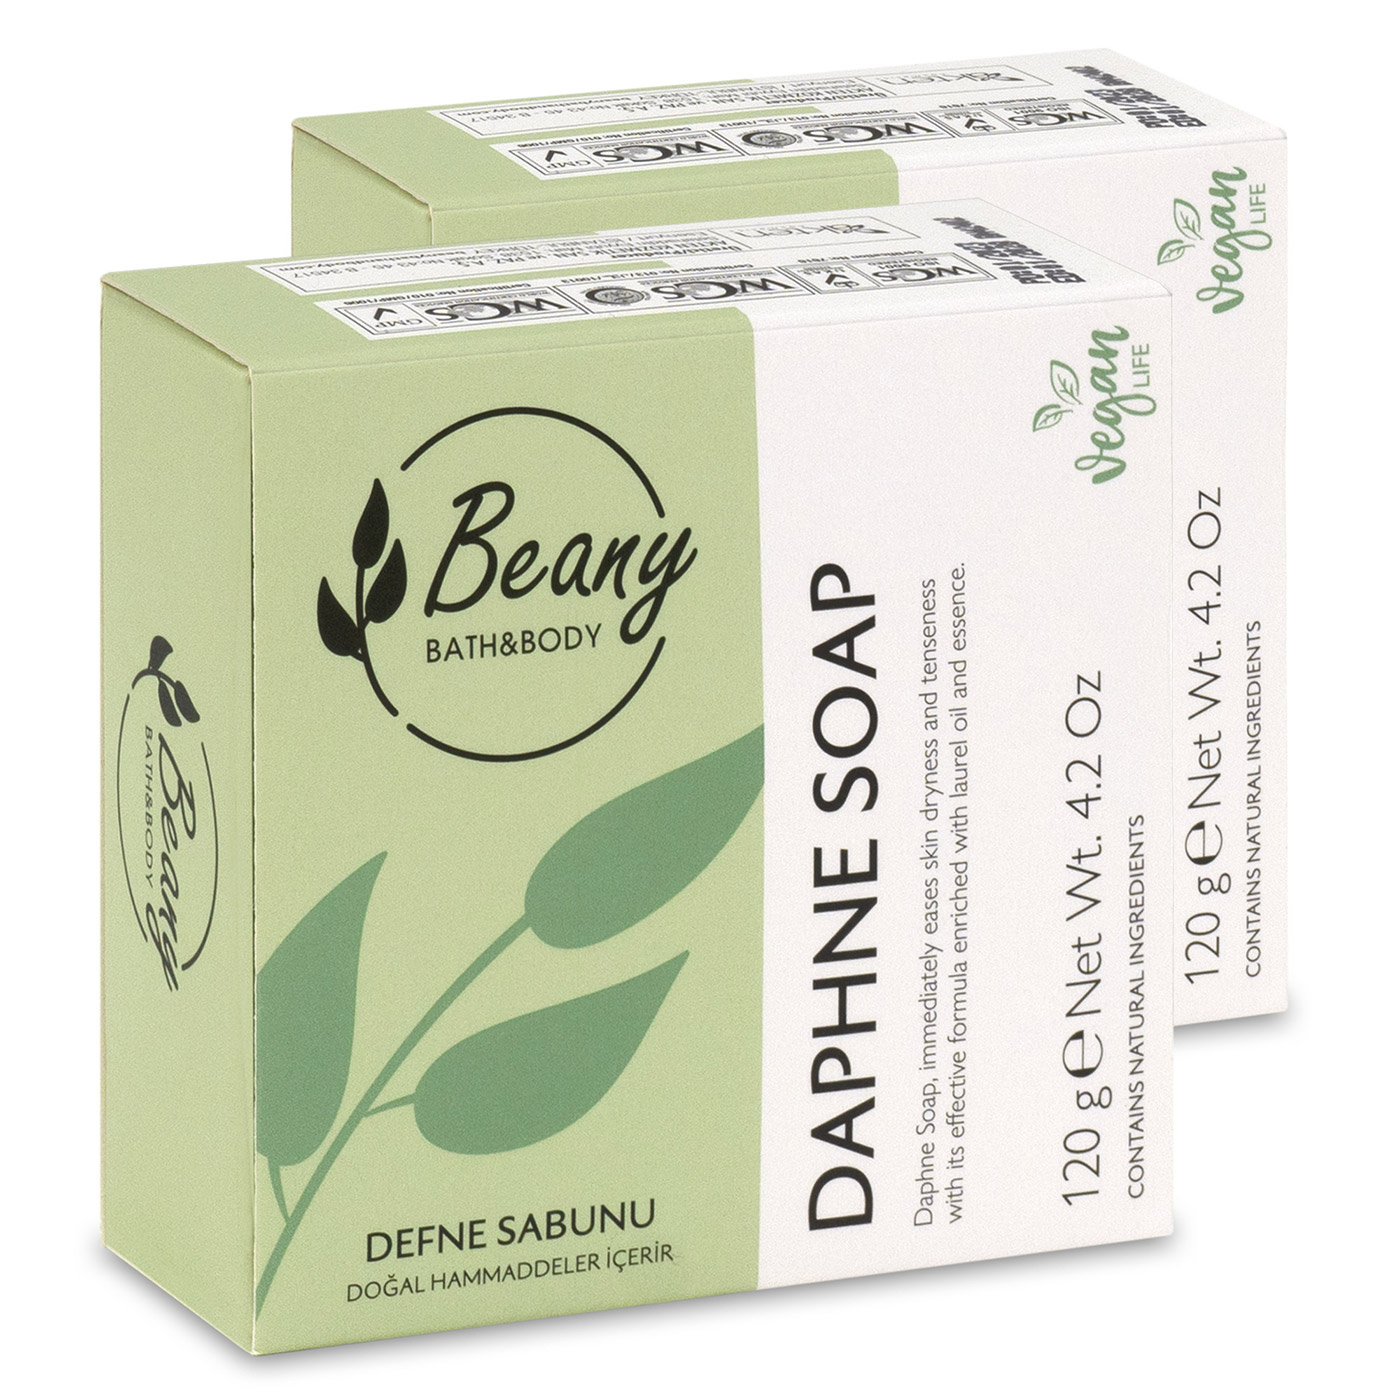 Мыло Beany твердое натуральное турецкое Daphne Extract Soap лавровое 2шт х 120г мыло beany твердое натуральное турецкое daphne extract soap лавровое